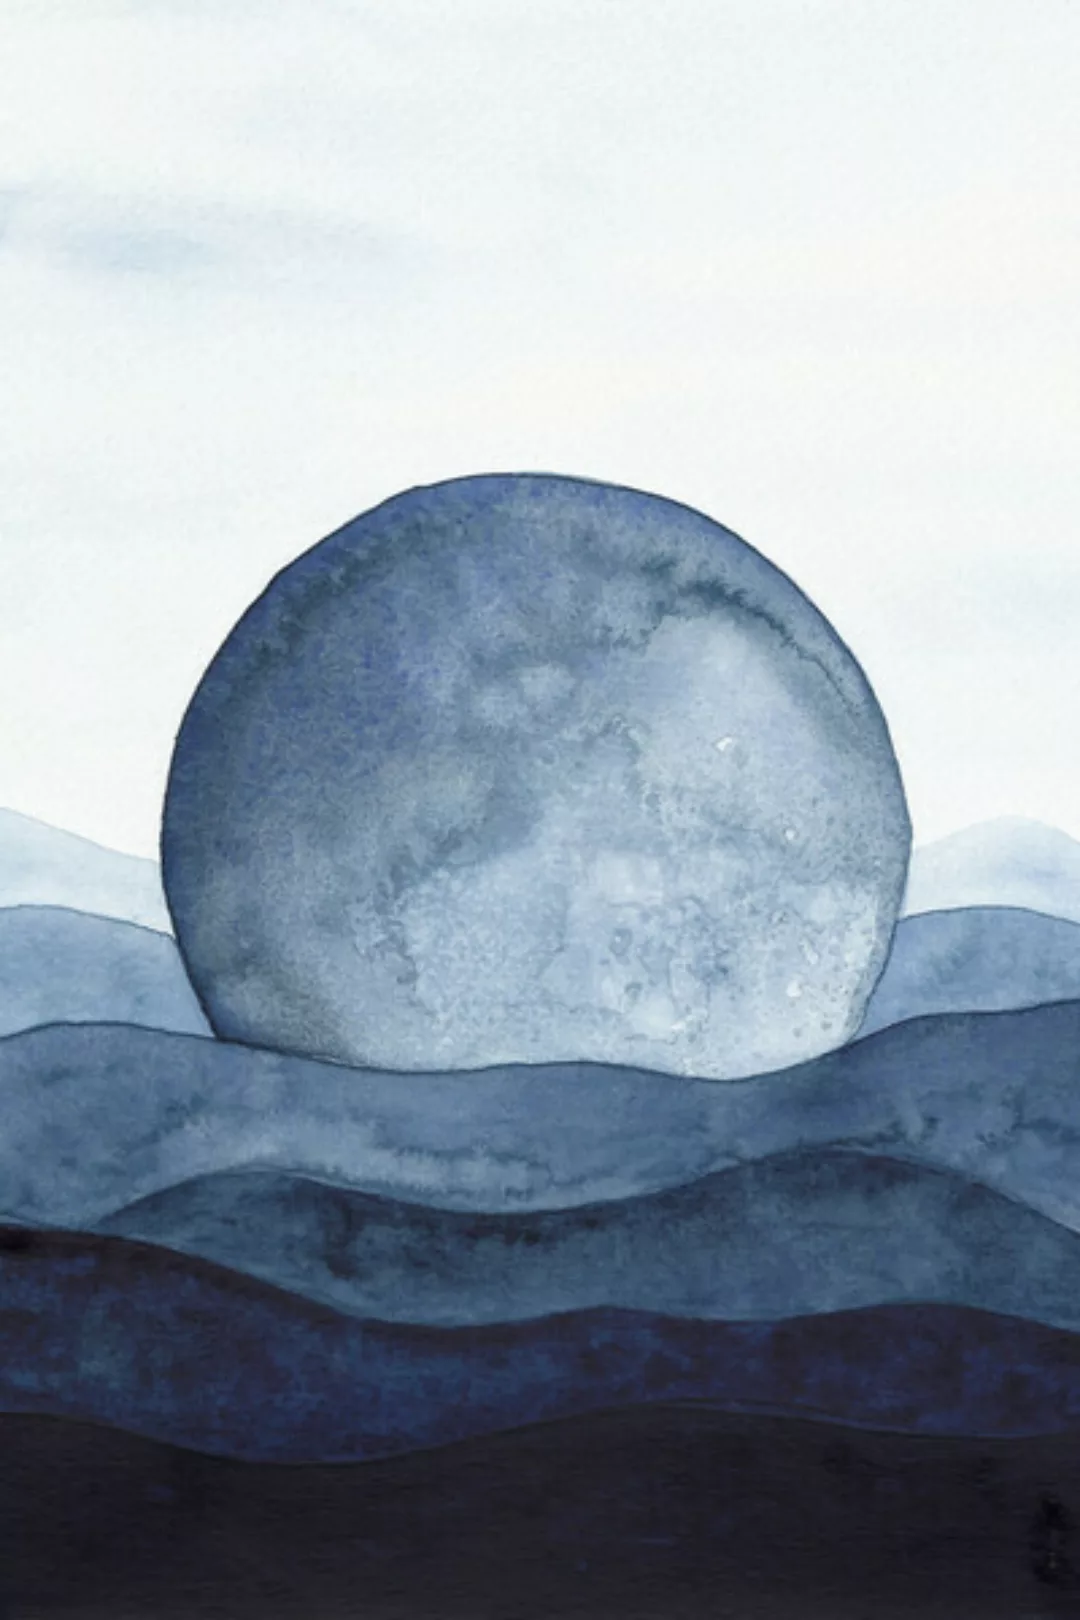 Poster / Leinwandbild - Moon Landscape | Watercolor Painting günstig online kaufen